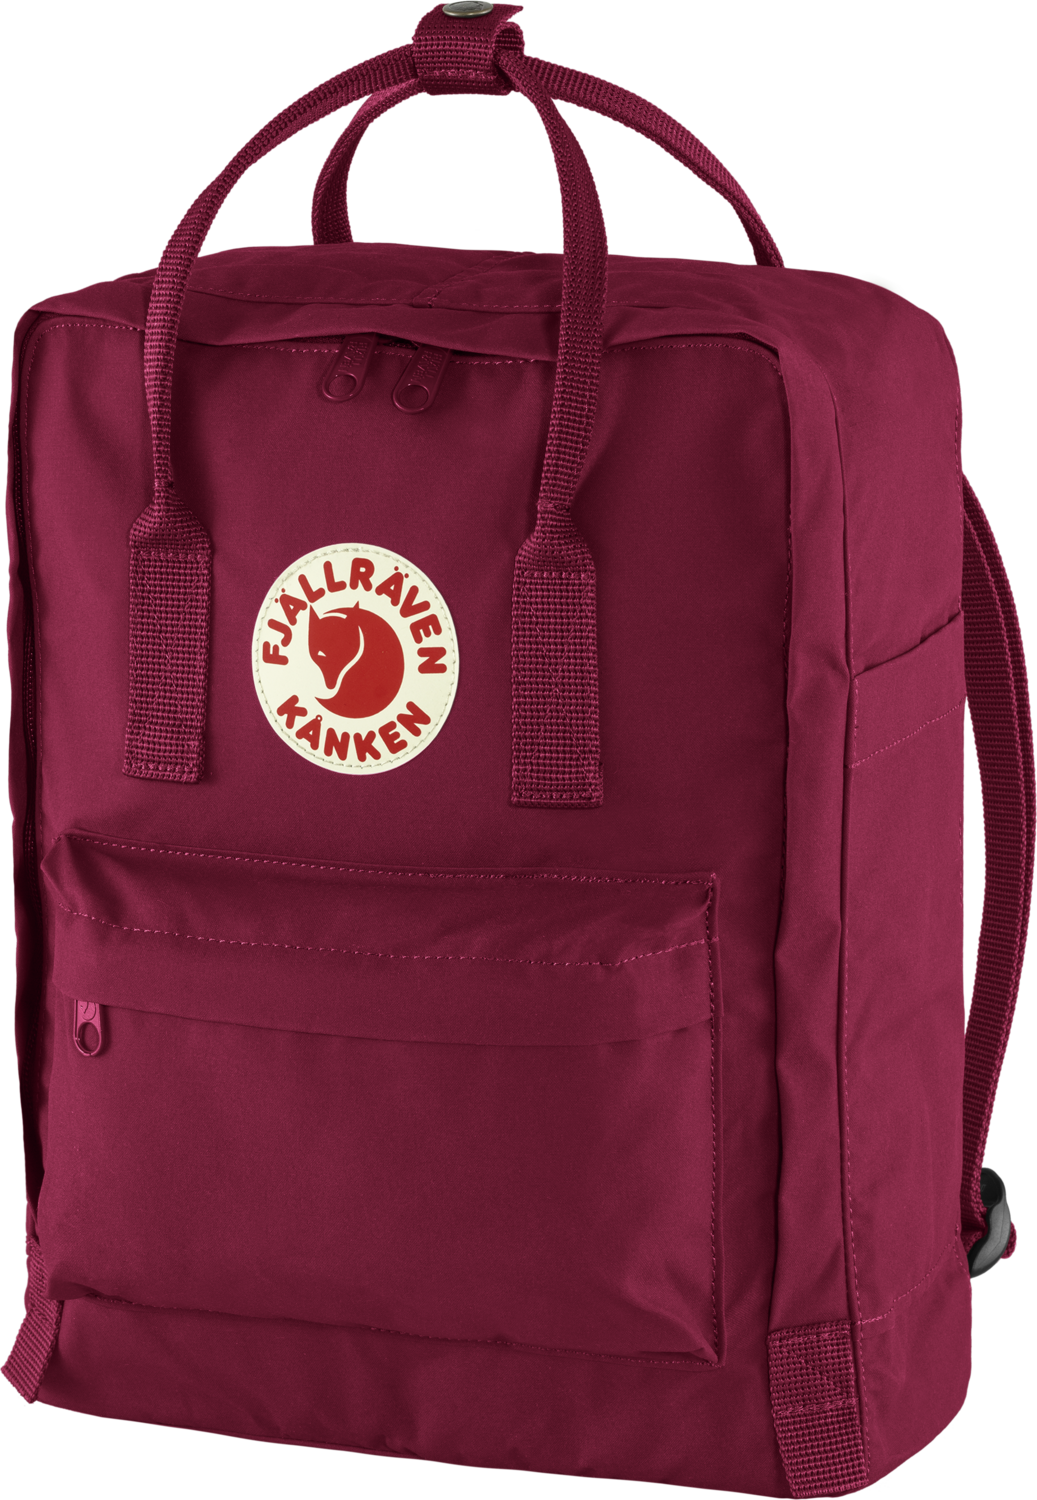 plum backpack